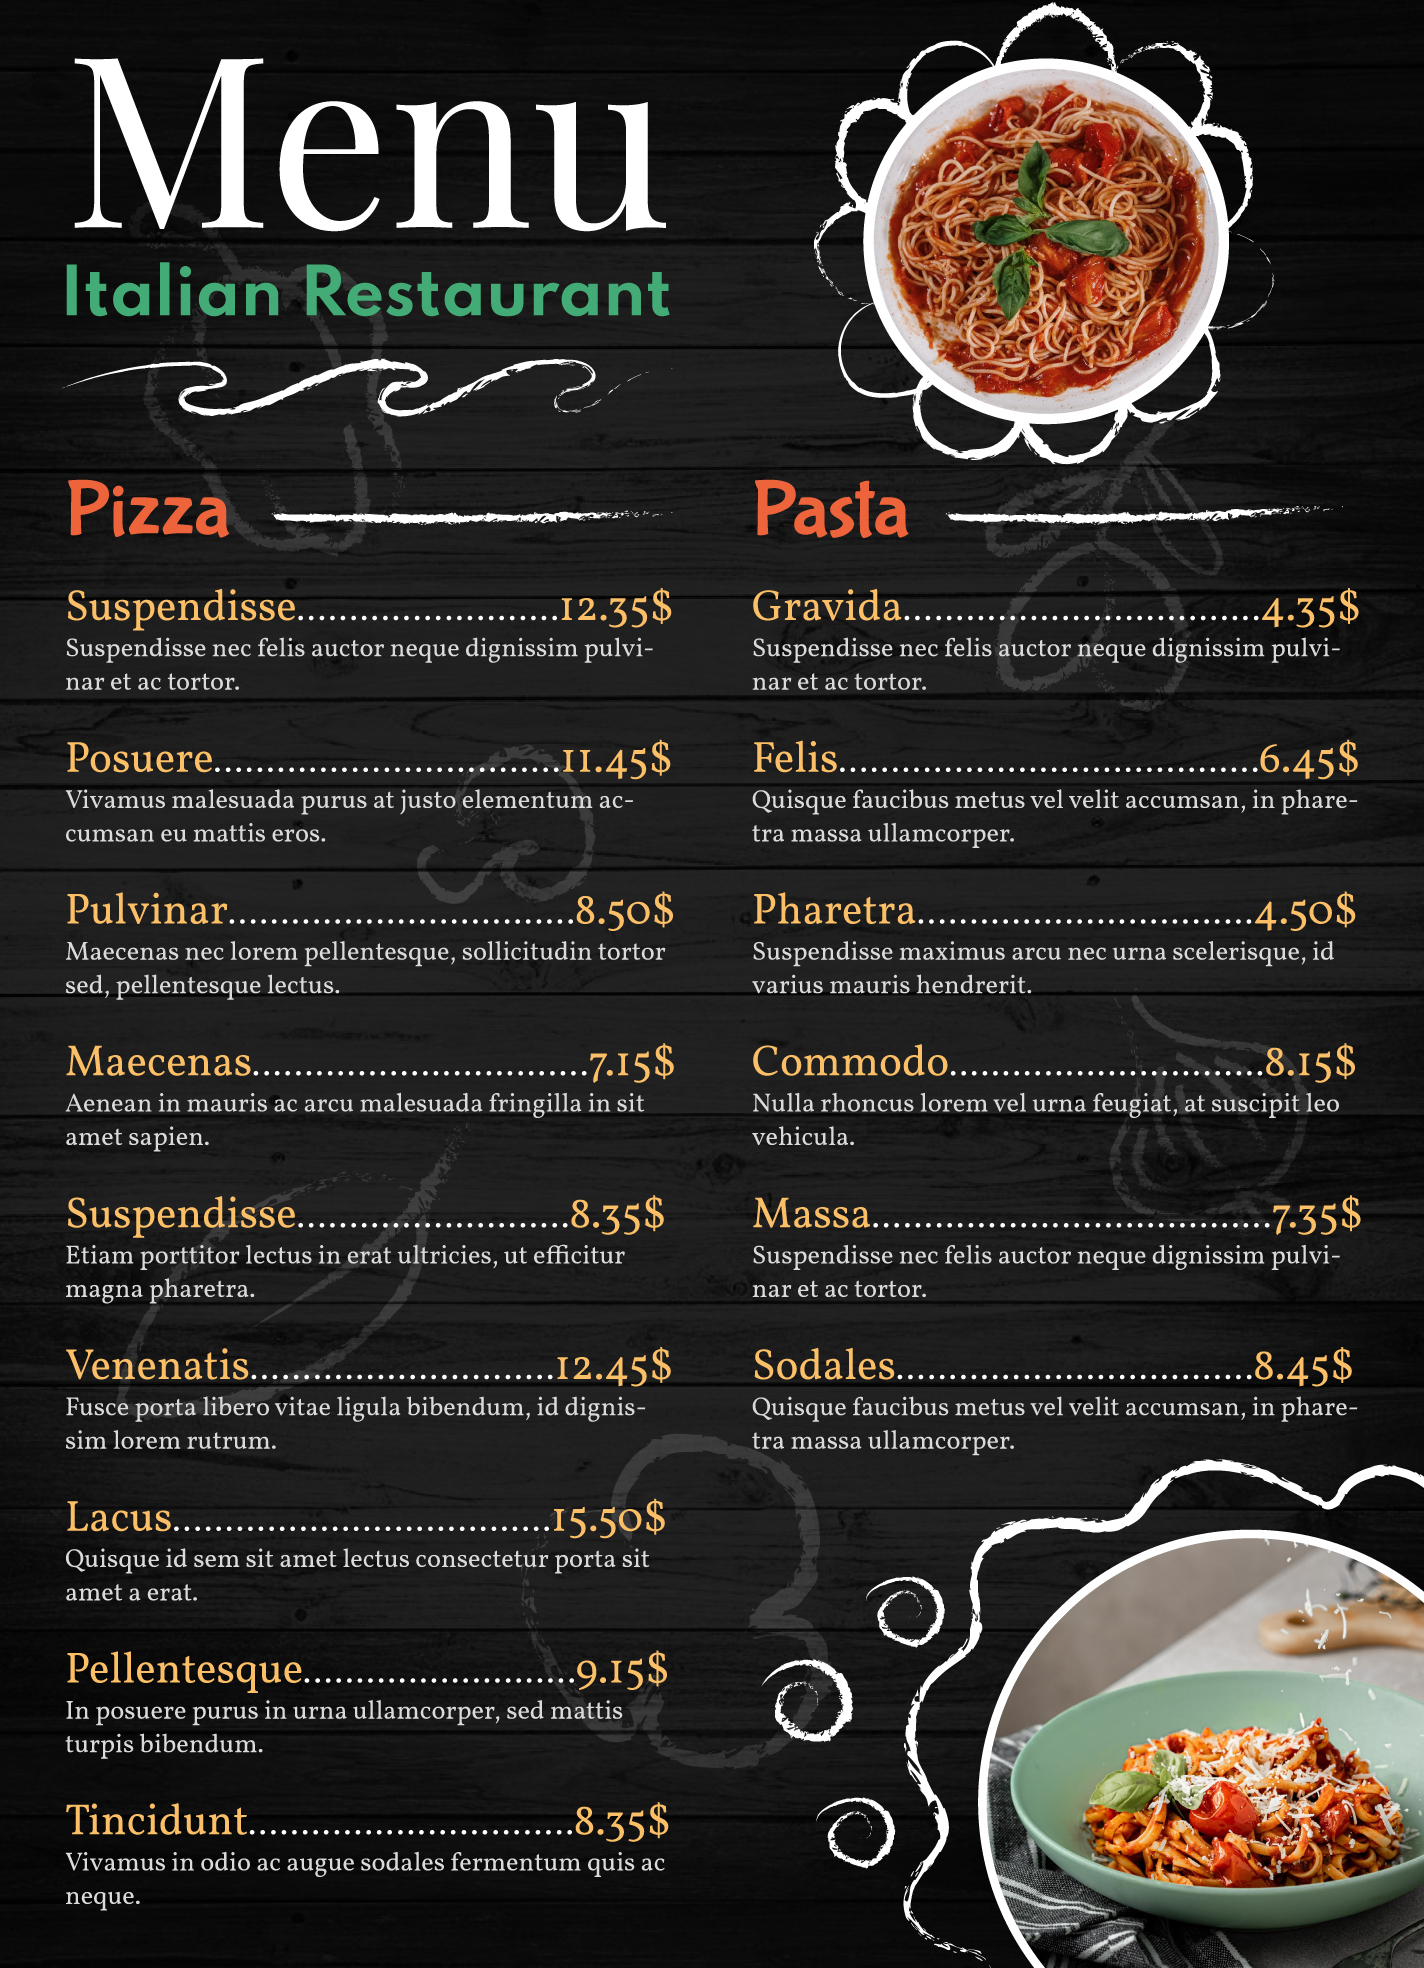 Italian Restaurant Menu Template tunersread com